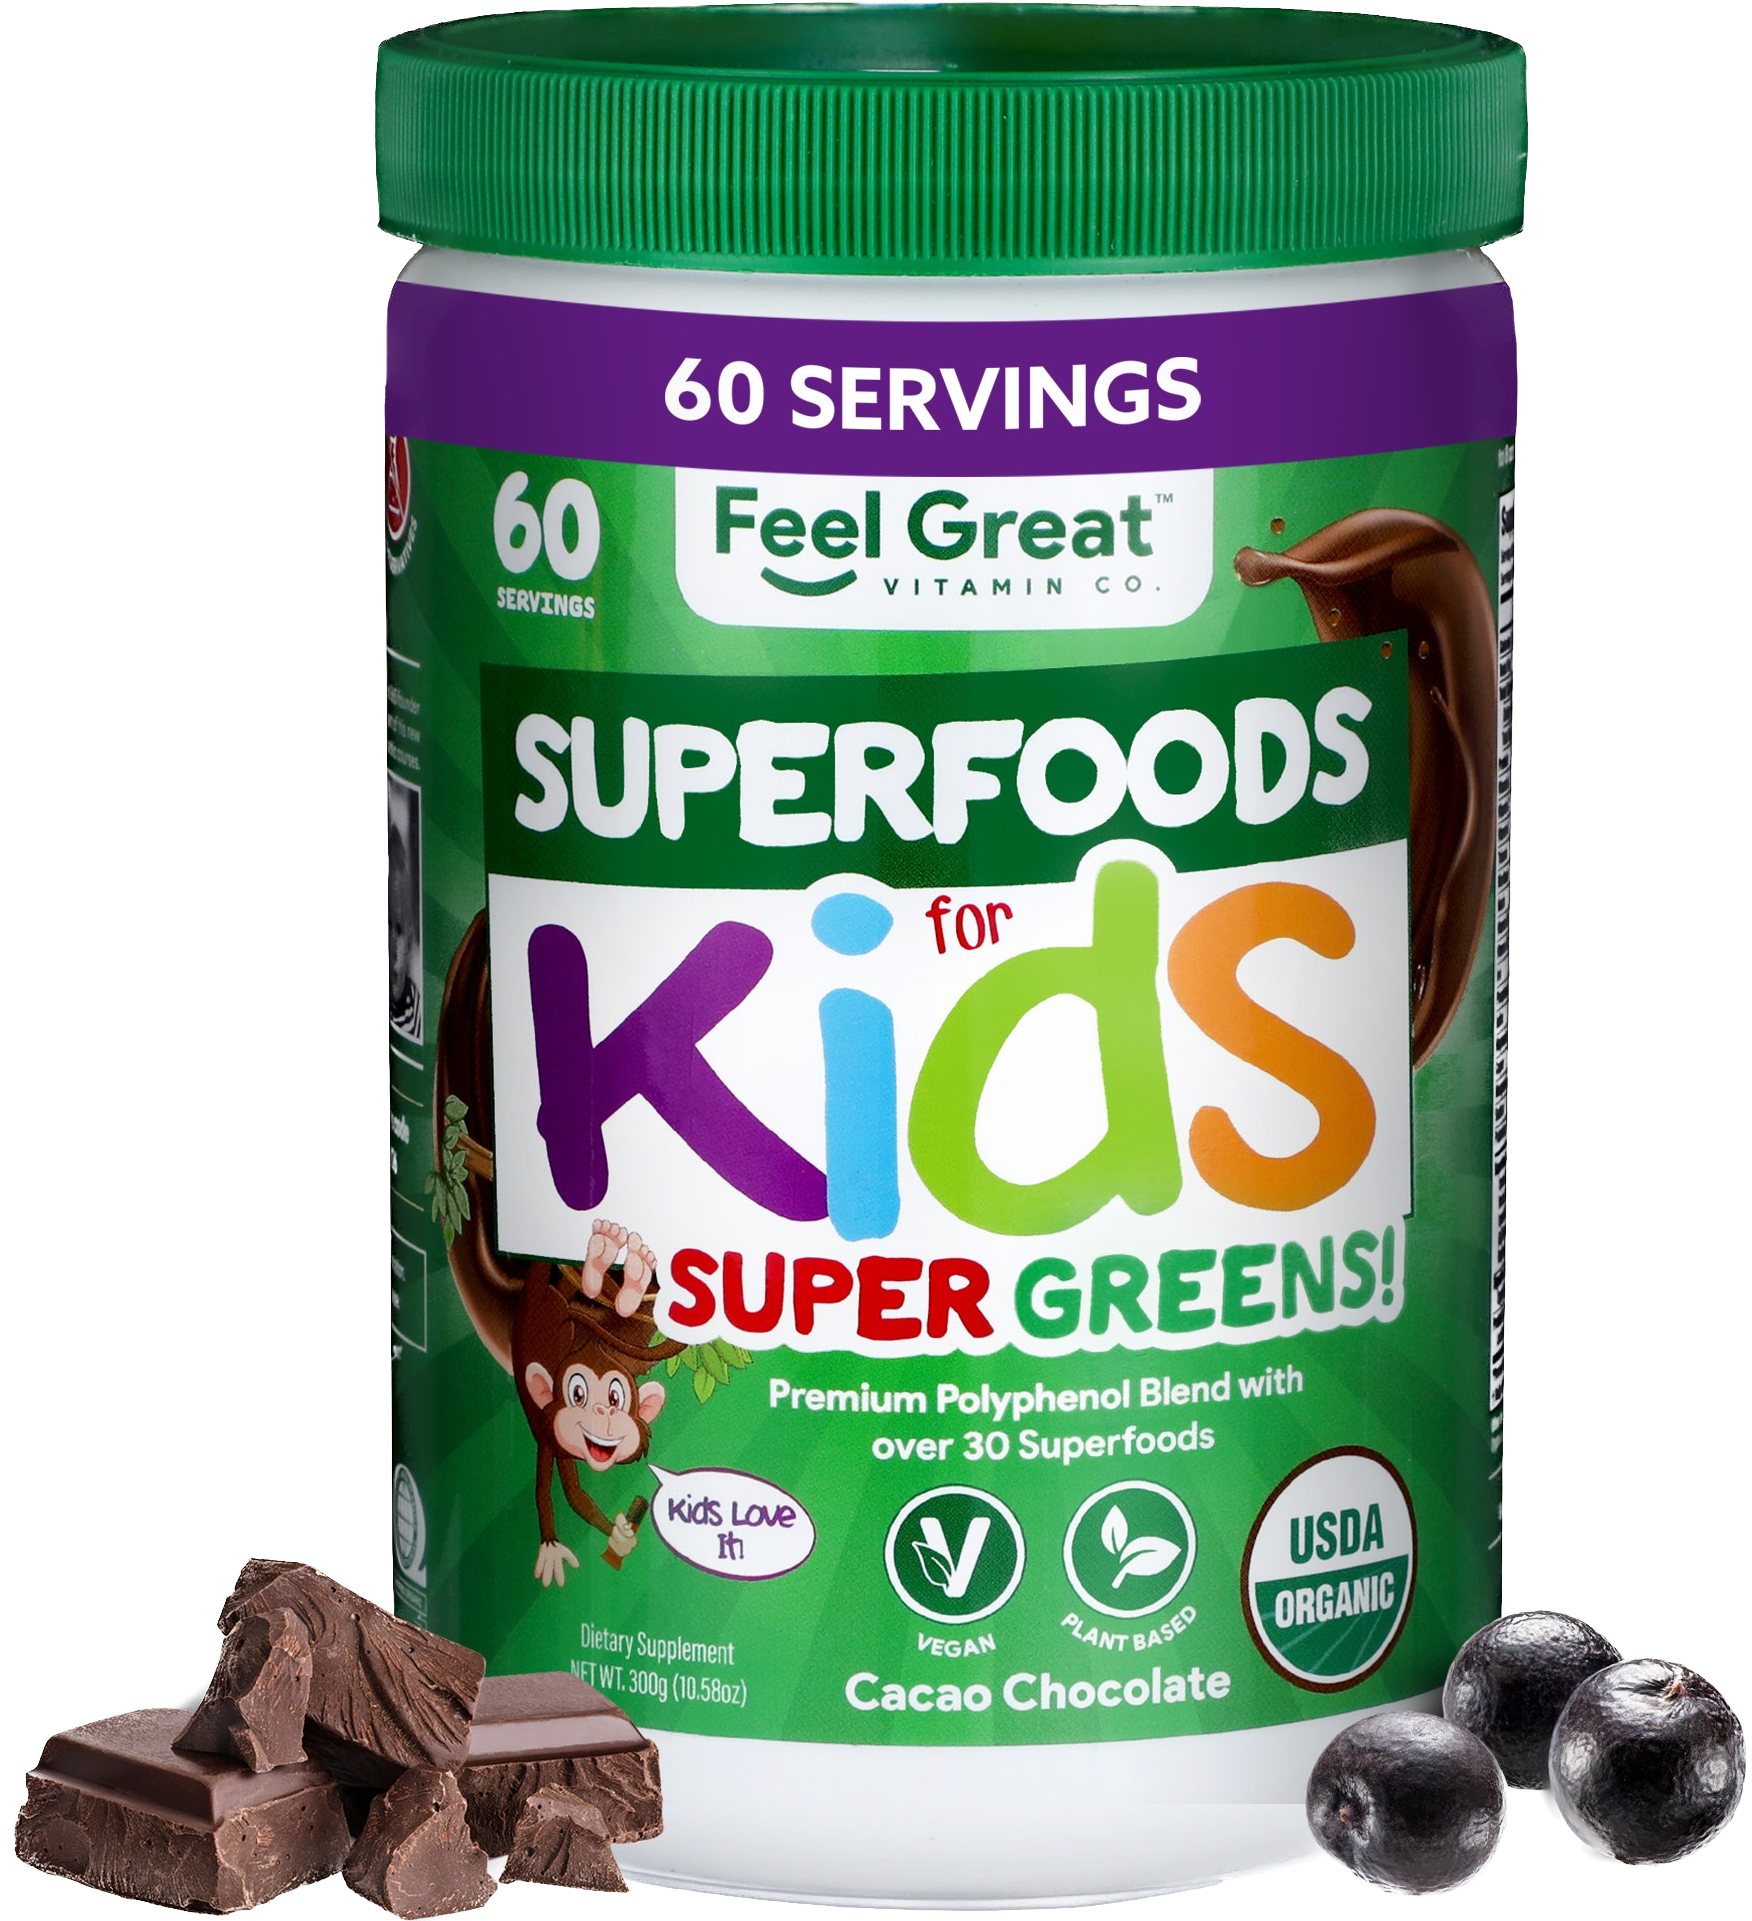 Kaged Organic Greens Superfood Powder | Apple Cinnamon | Wellness with  Supergreens | Apple Cider Vin…See more Kaged Organic Greens Superfood  Powder 